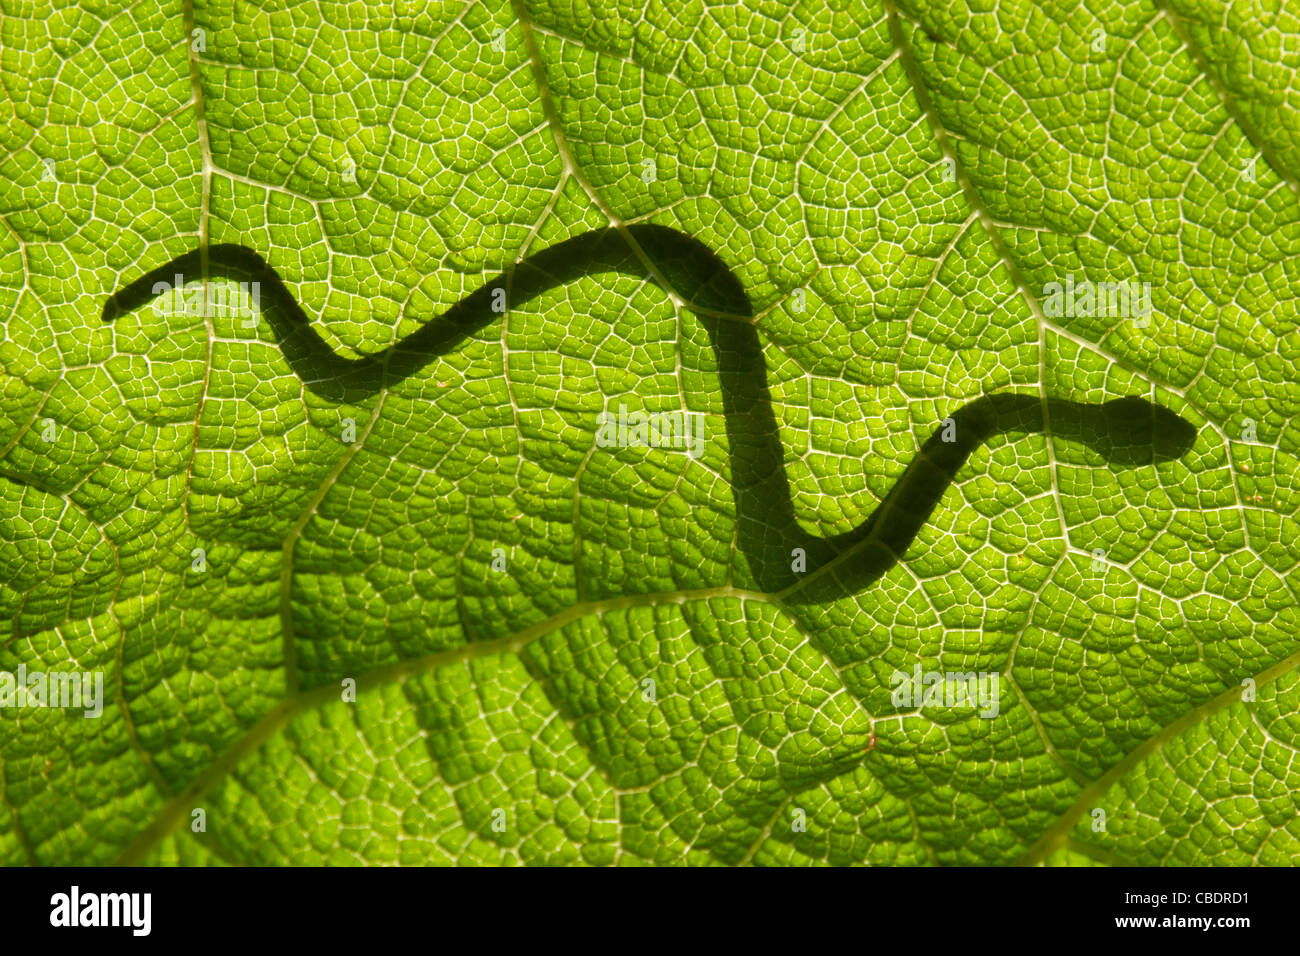 Snake on a leaf Stock Photo